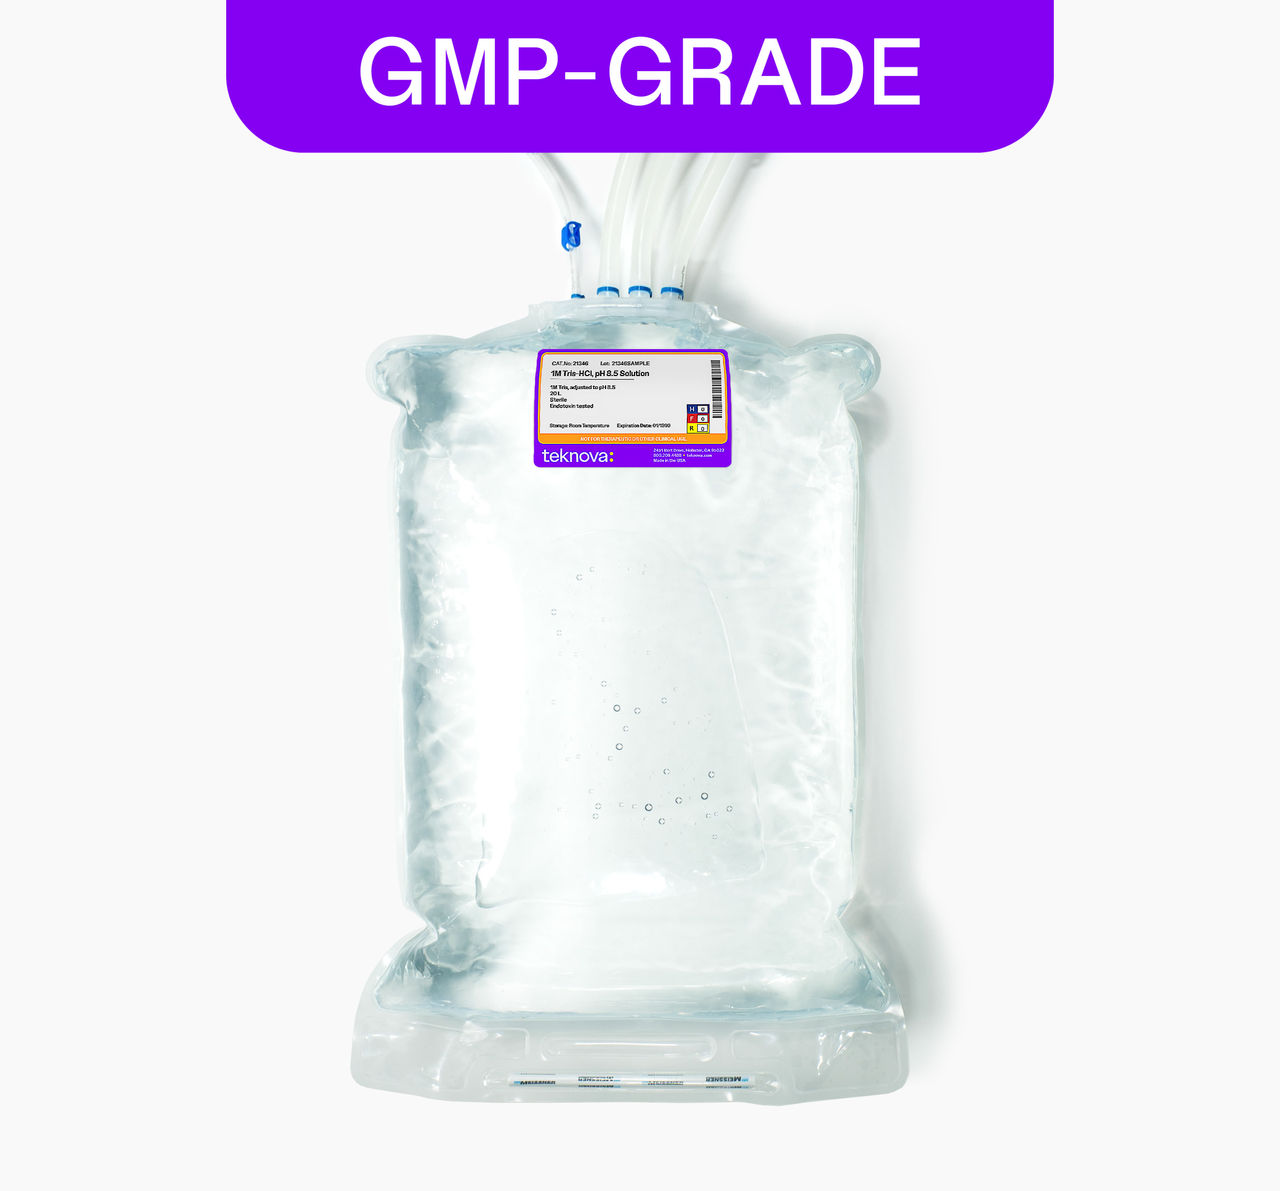 1M Tris-HCl, pH 8.5 Solution, 20L, GMP-grade